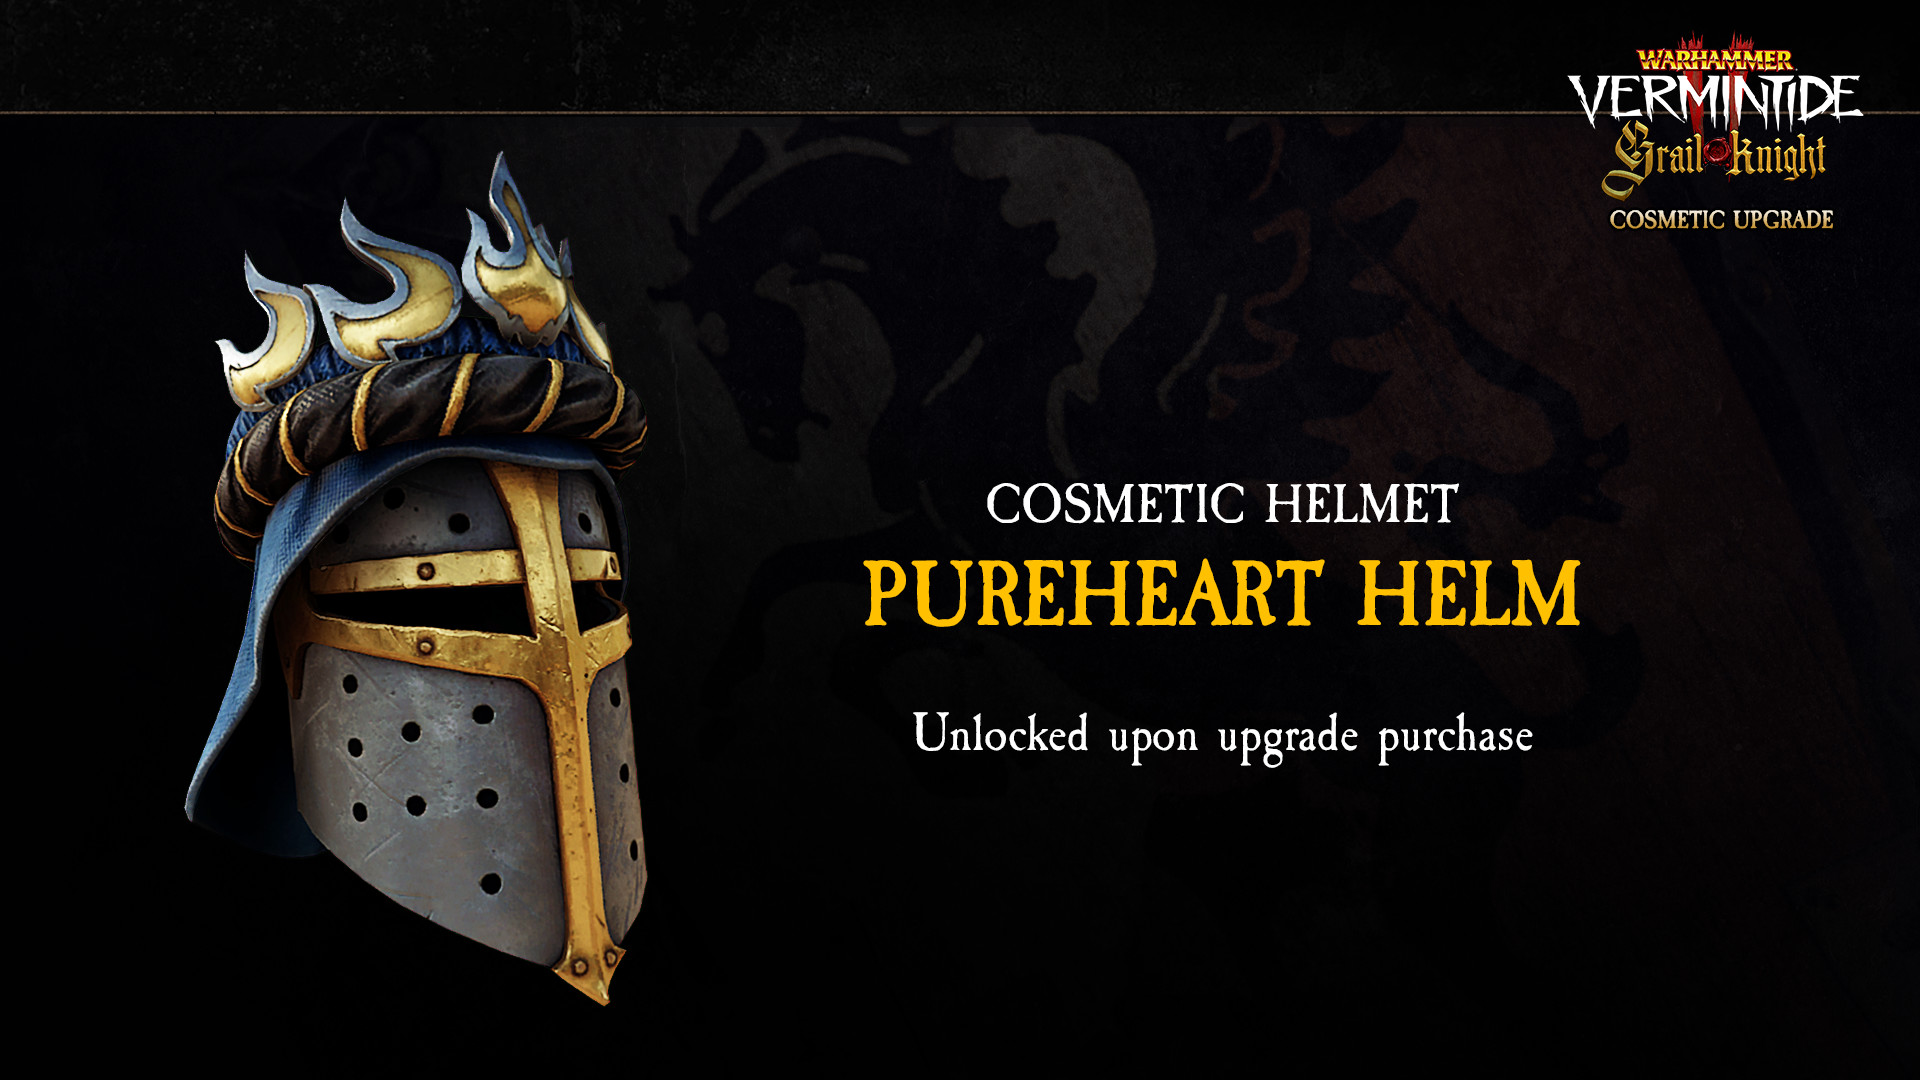 Warhammer: Vermintide 2 - Grail Knight Cosmetic Upgrade Featured Screenshot #1